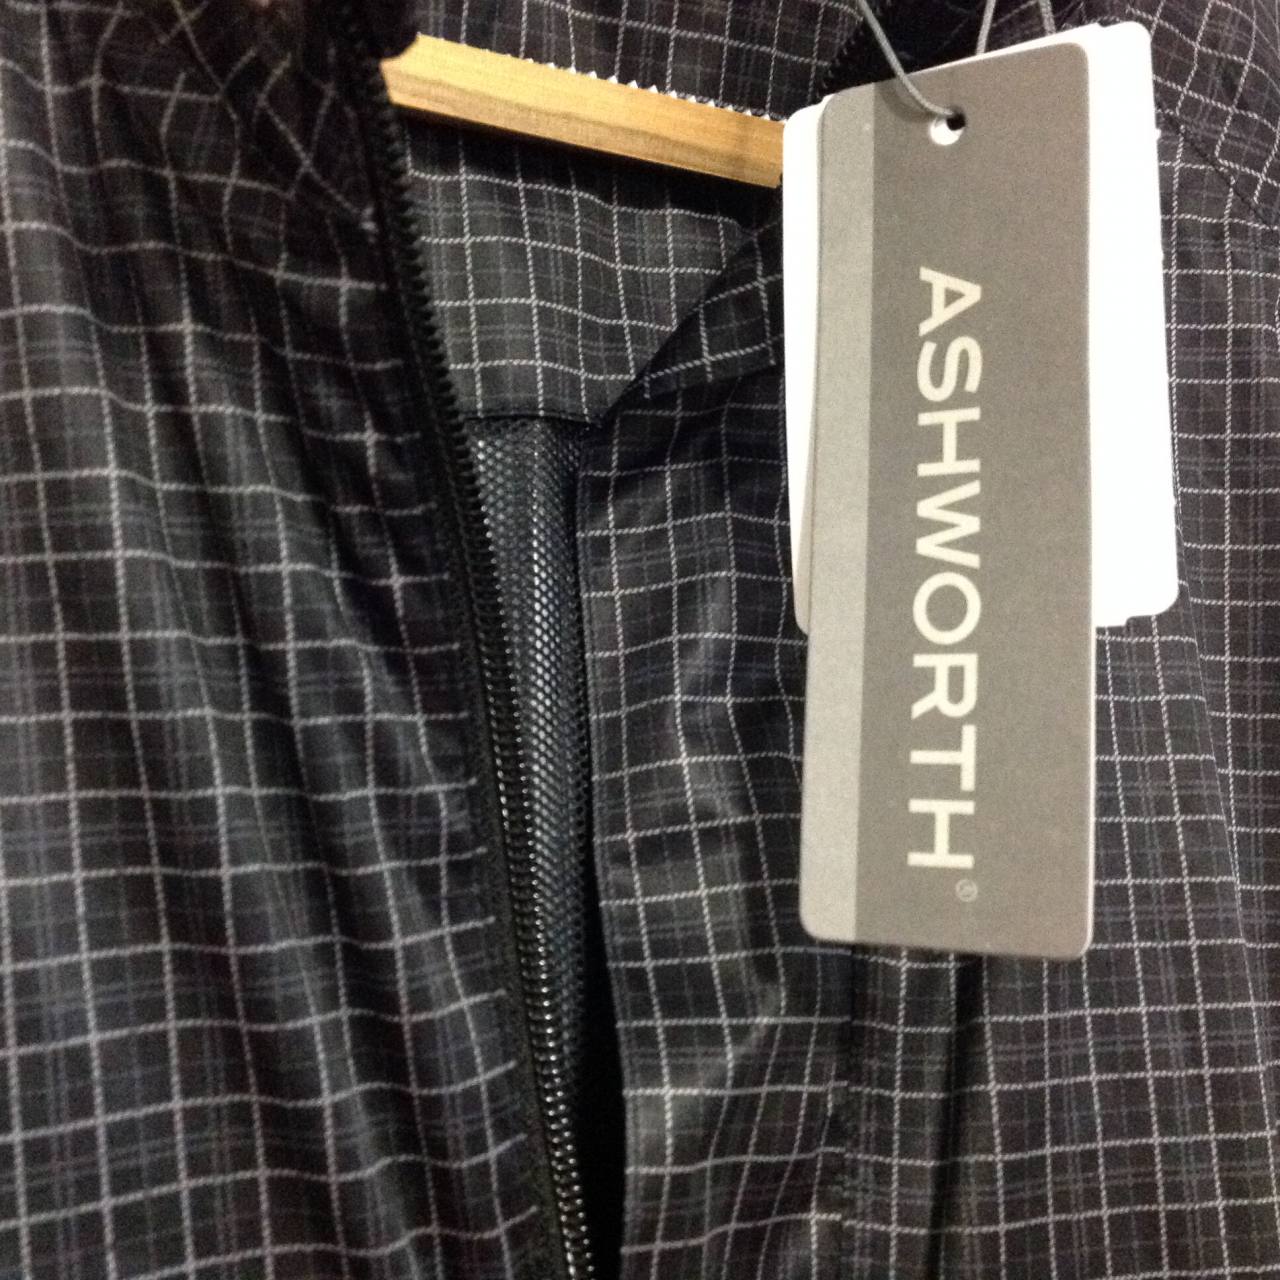 NEW Ashworth Lightweight Golf Jacket Grey and Black Check – Size Large ...